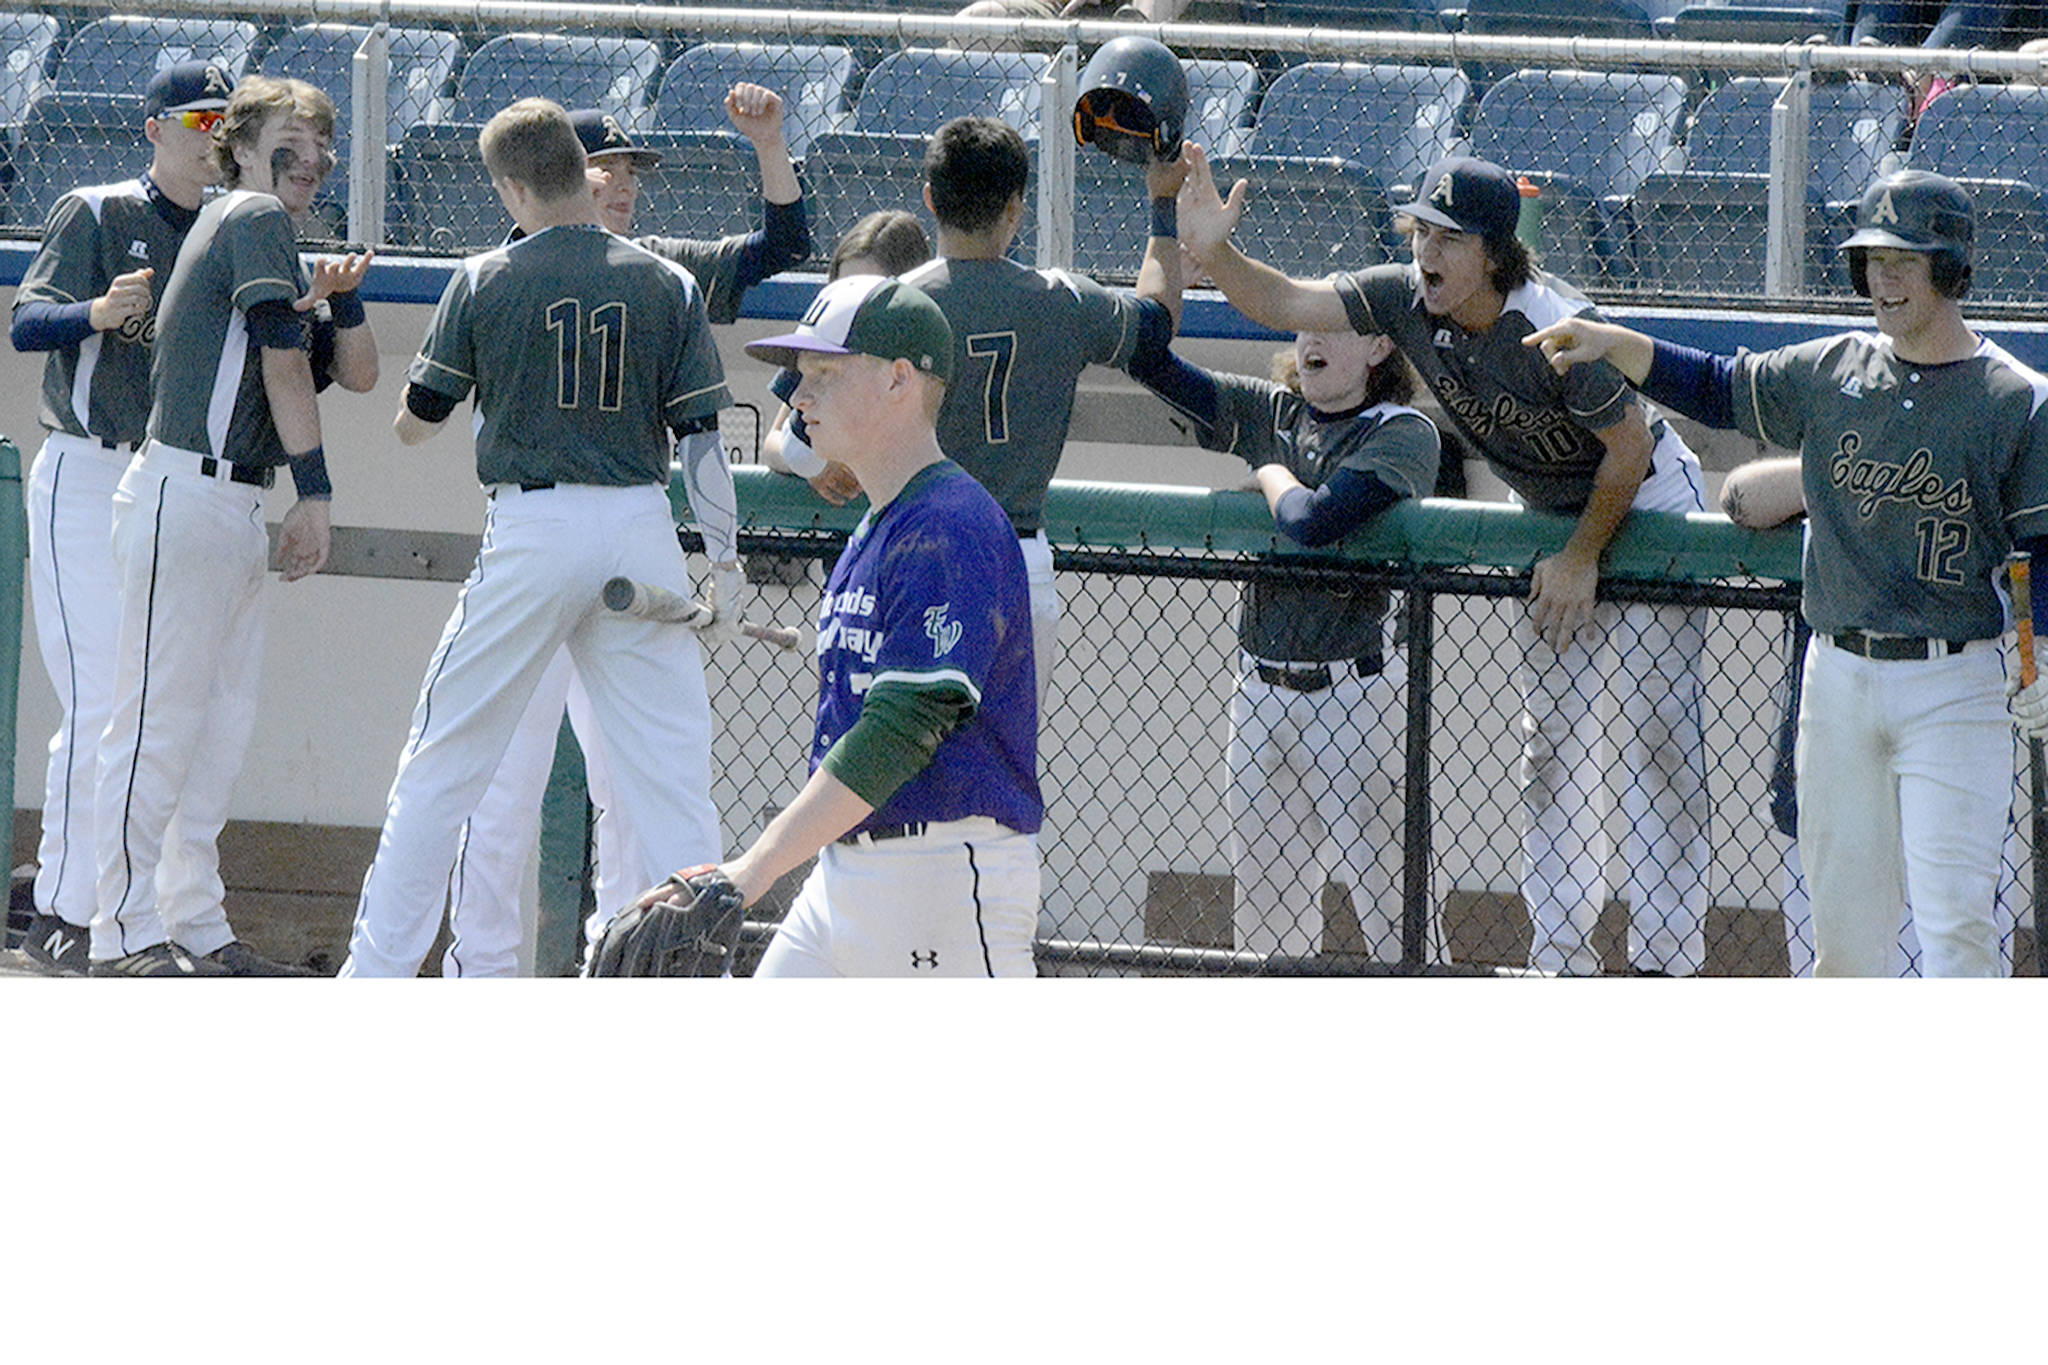 E-W’s pitcher walks away as Arlington’s boys baseball team celebrates their big inning.